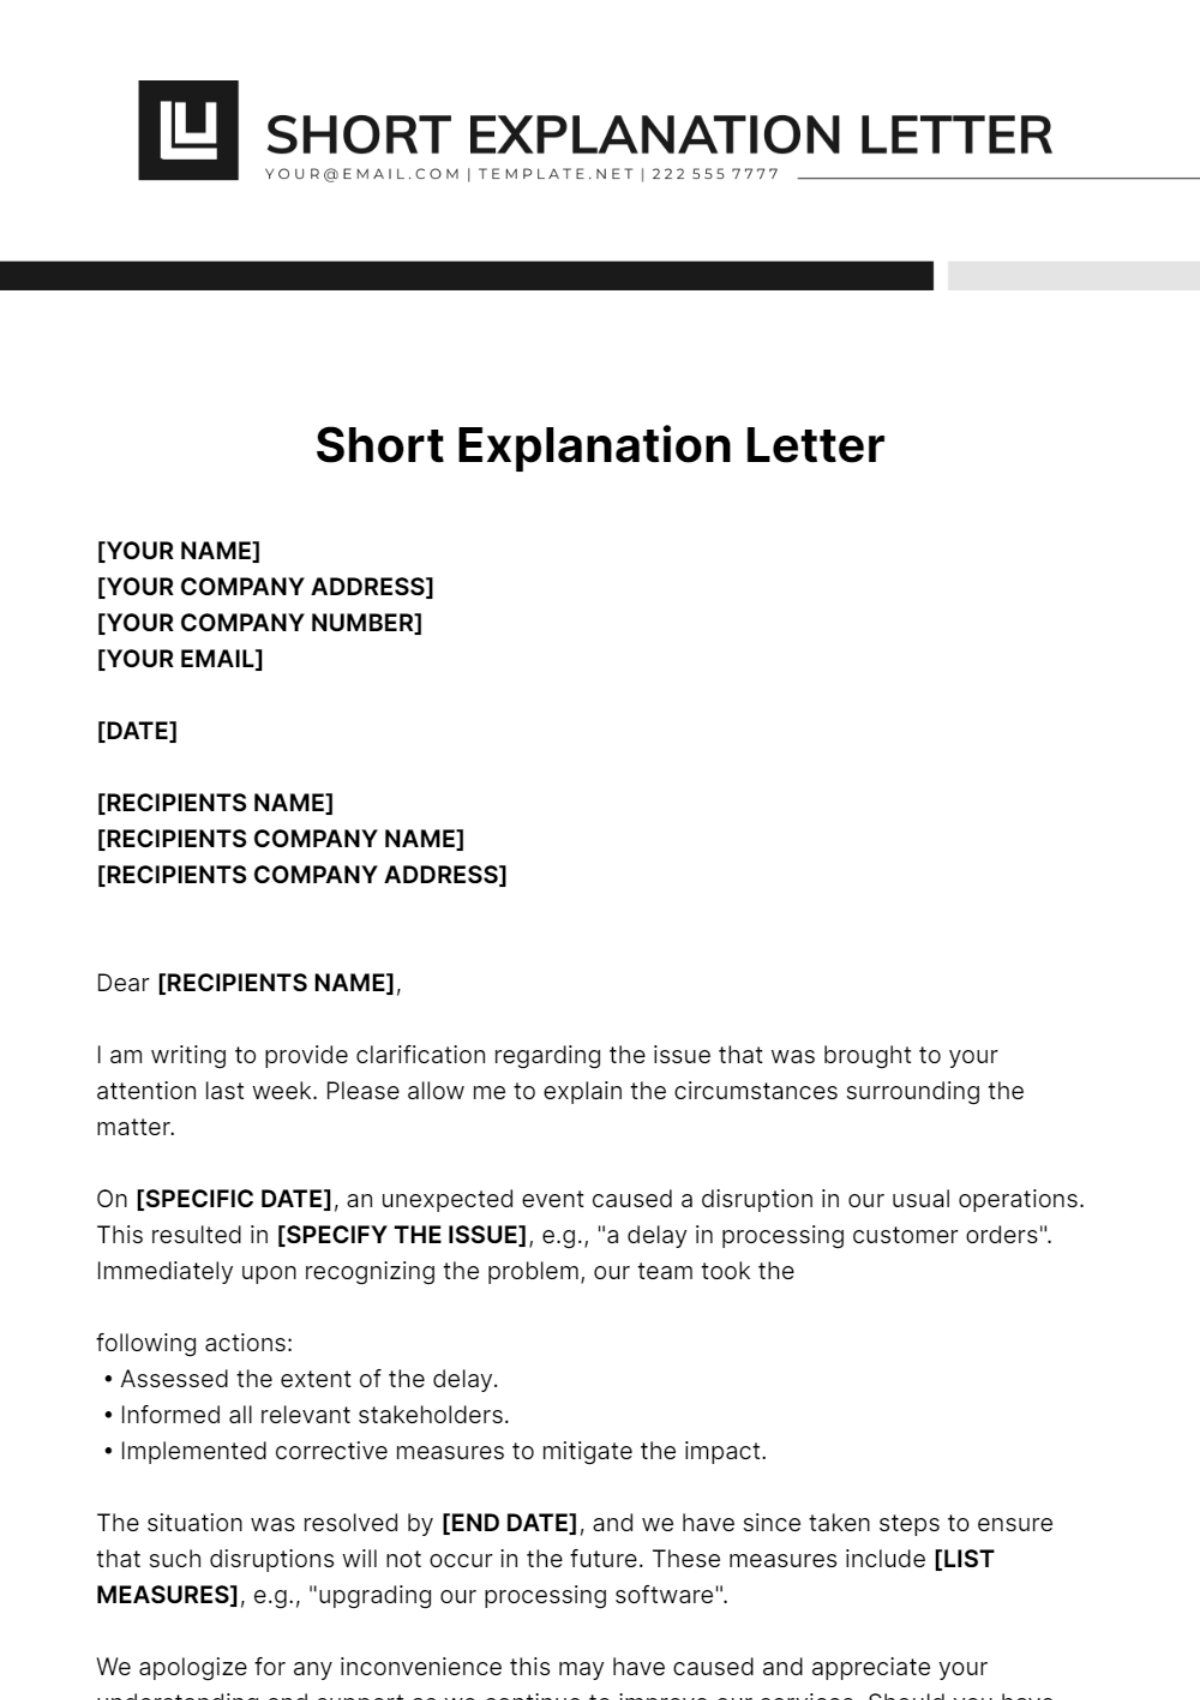 Short Explanation Letter Template